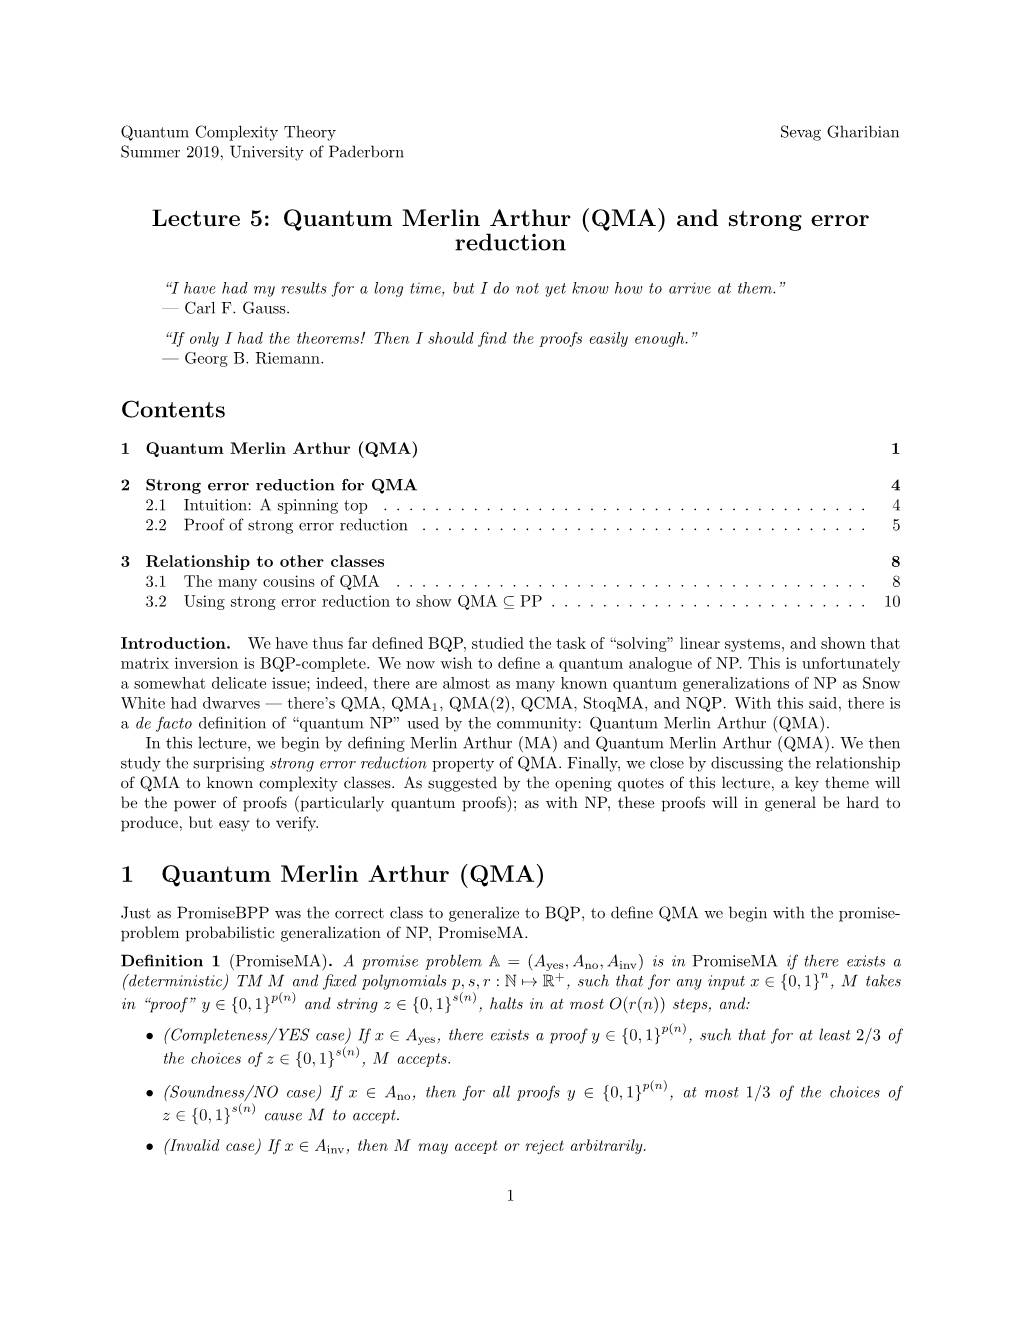 Quantum Merlin Arthur (QMA) and Strong Error Reduction